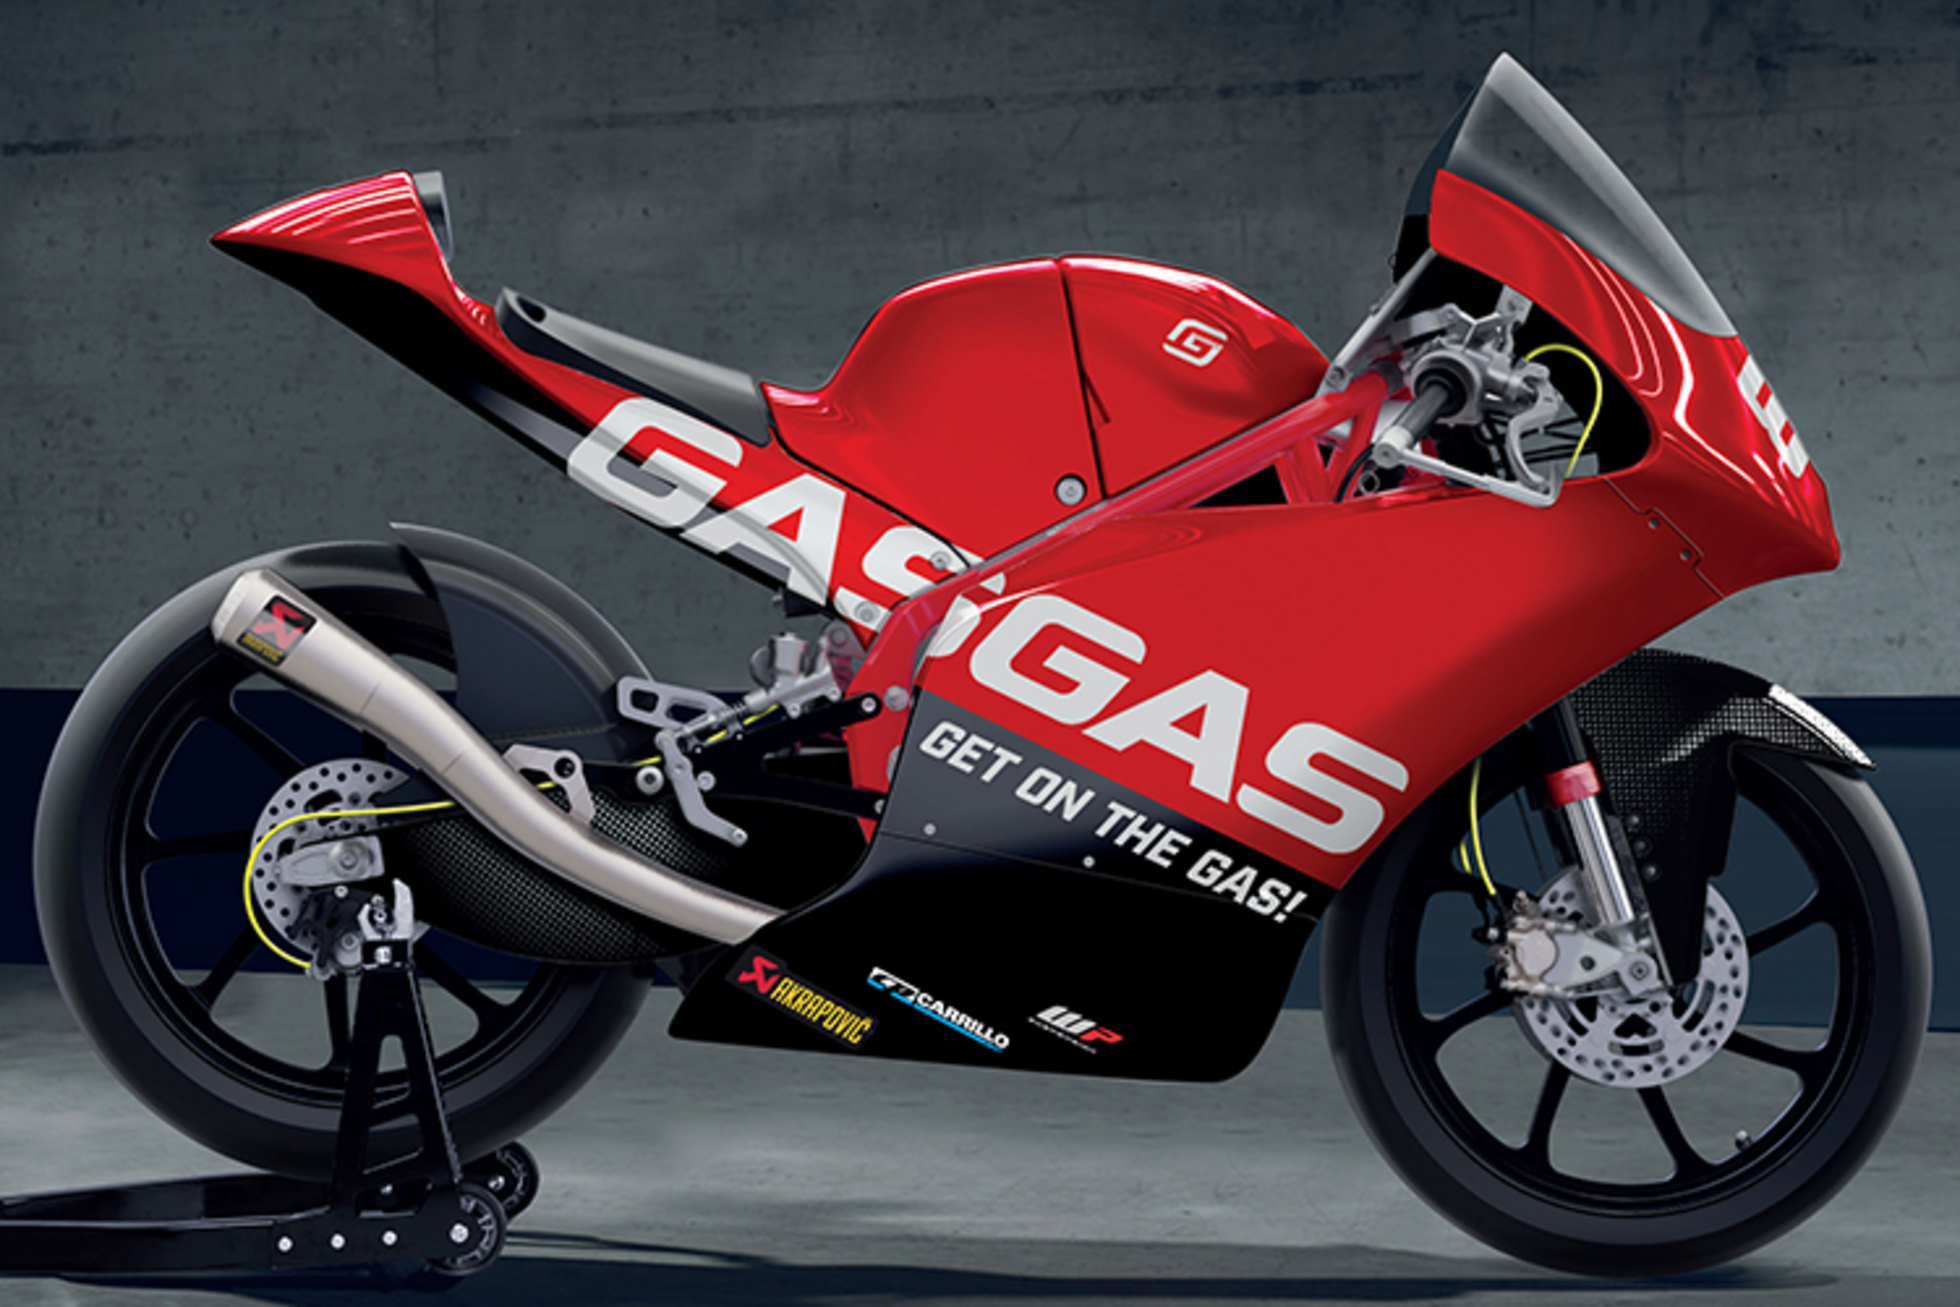 Offiziell Gasgas Debutiert 2021 In Der Moto3 Wm Moto3 Speedweek Com